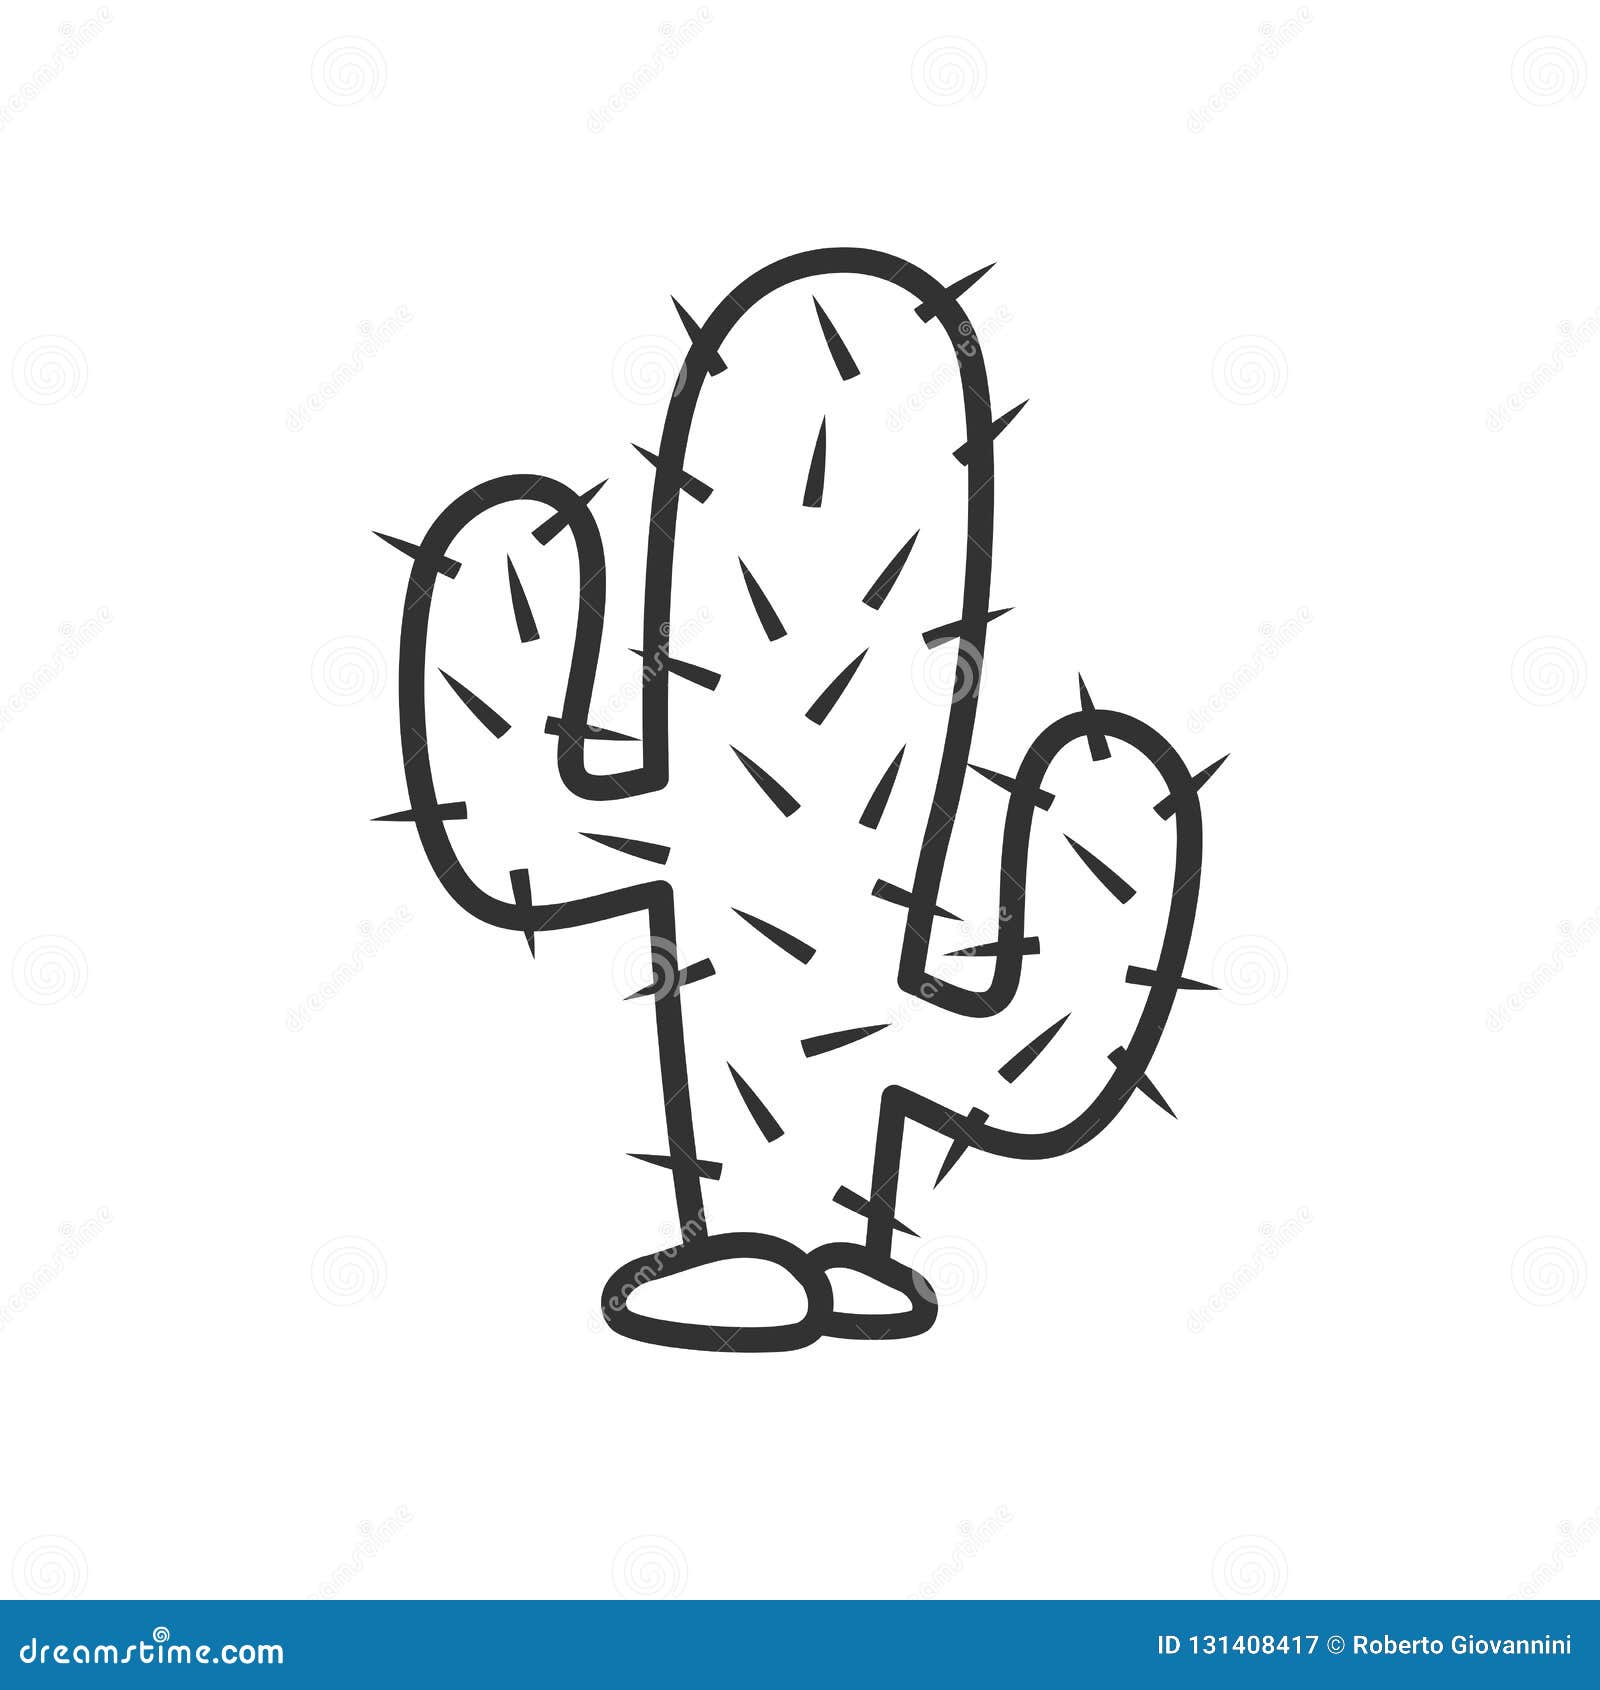 desert cactus outline flat icon on white